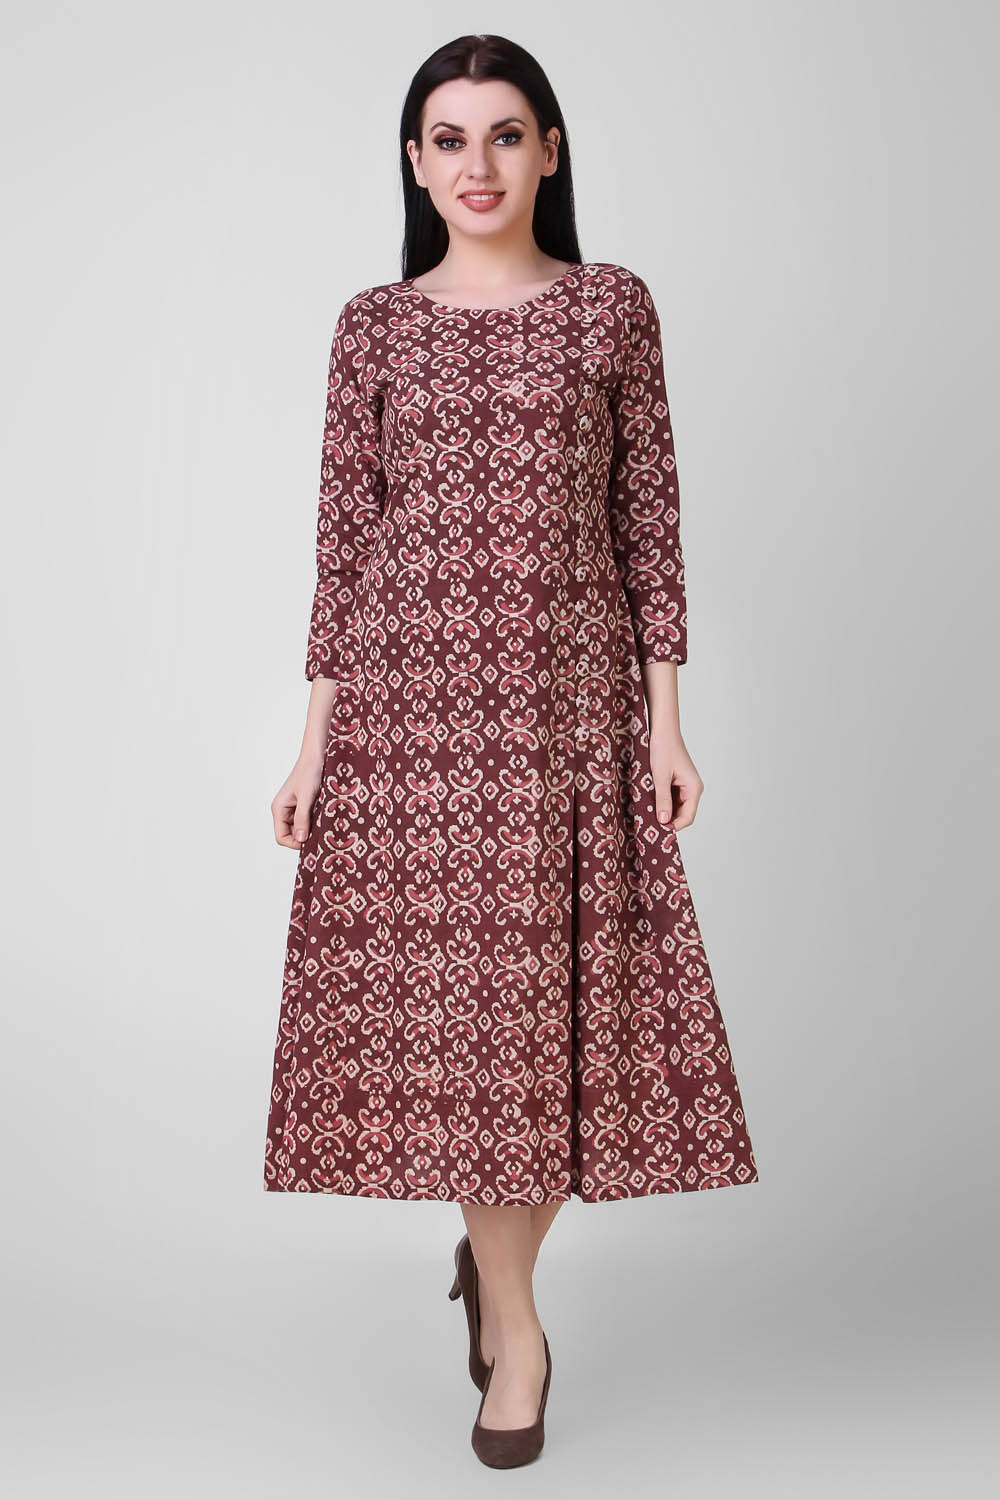 Dabu Side Pleated Dress - Dresses Women Apparel | World Art Community